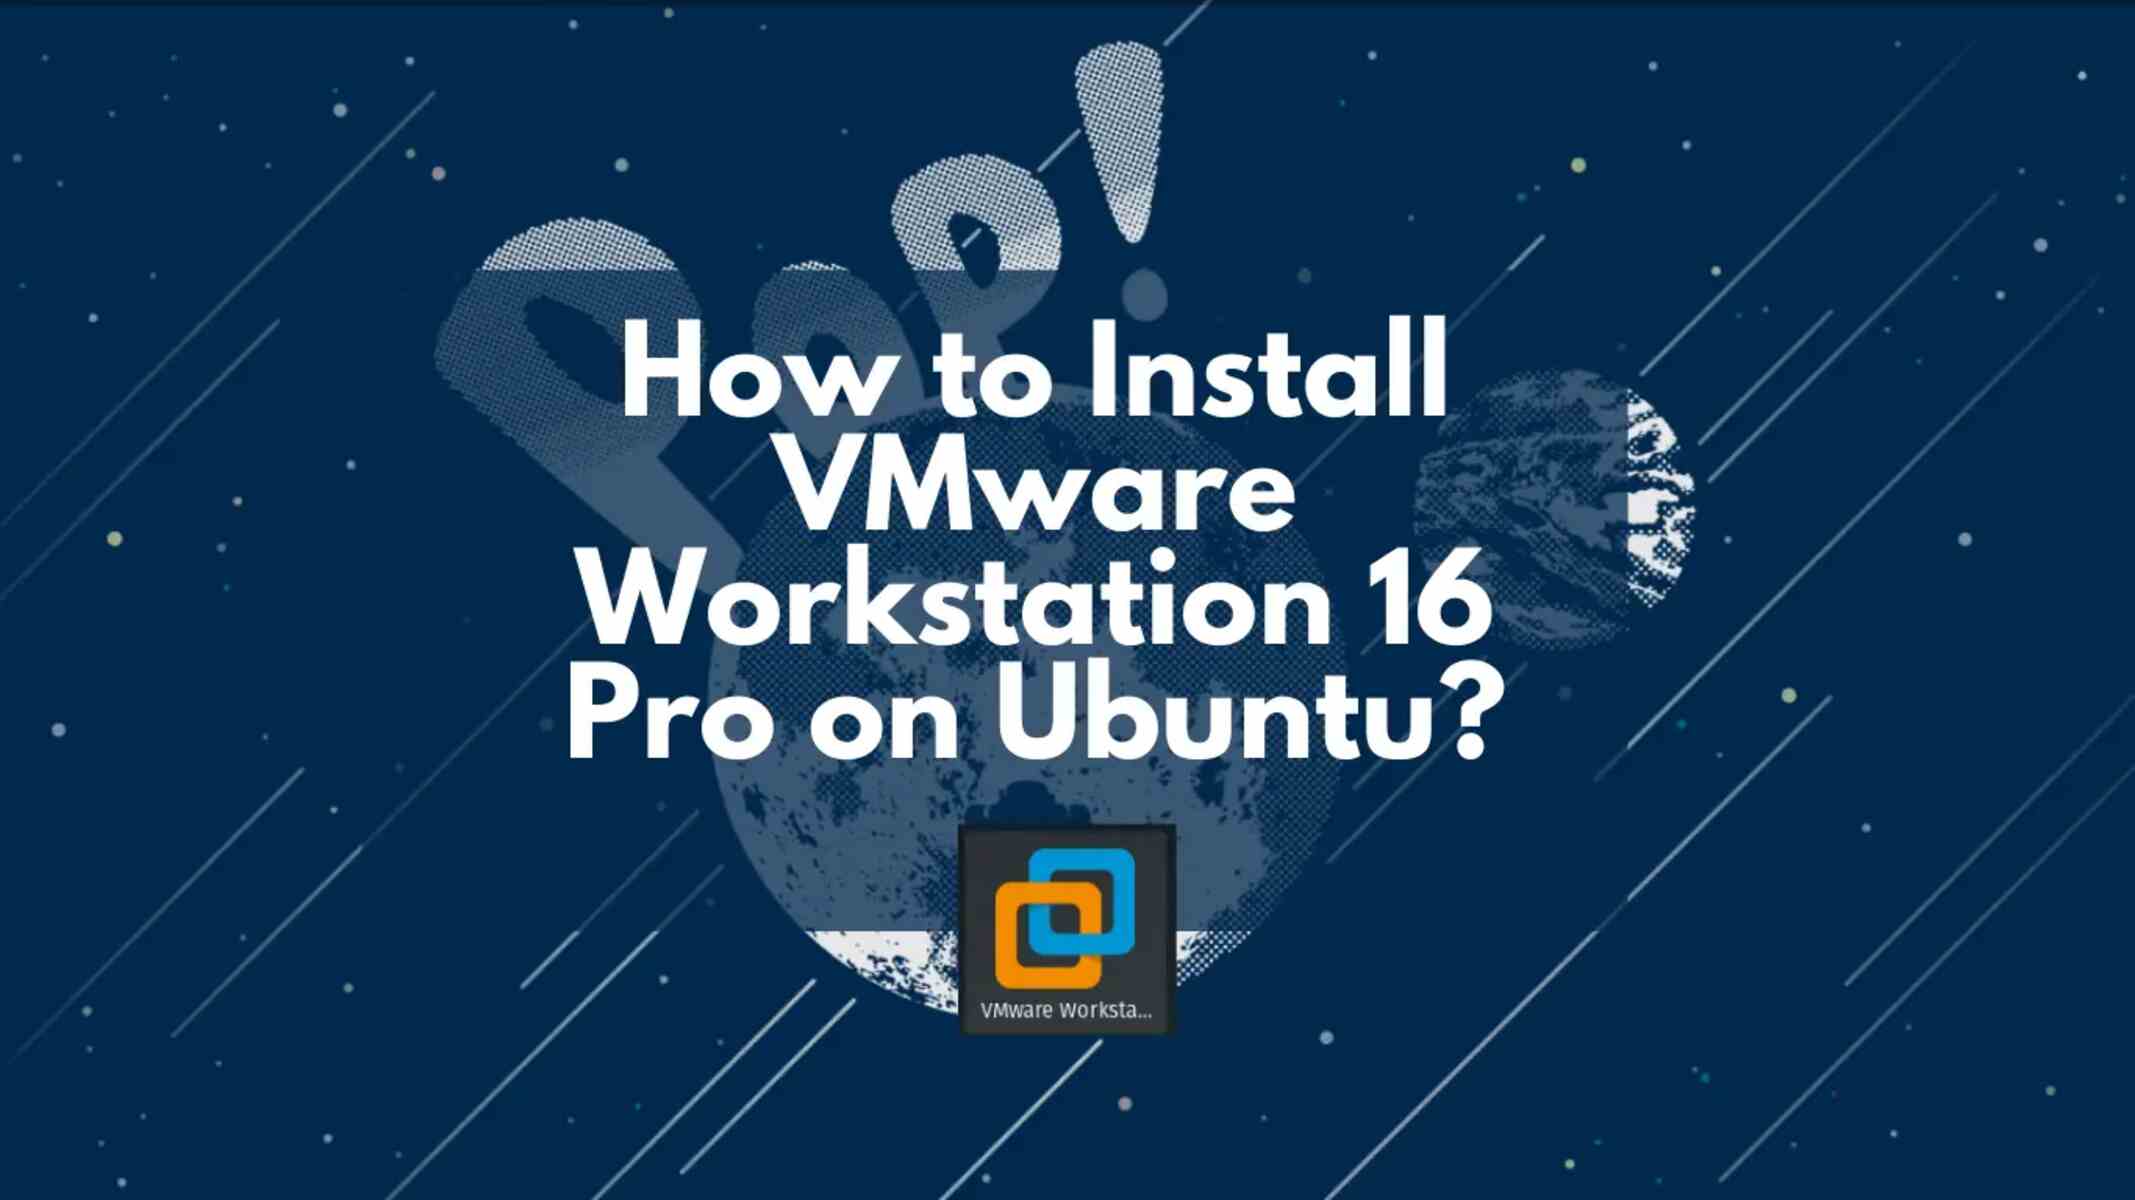 vmware workstation 14.1.7 download ubuntu